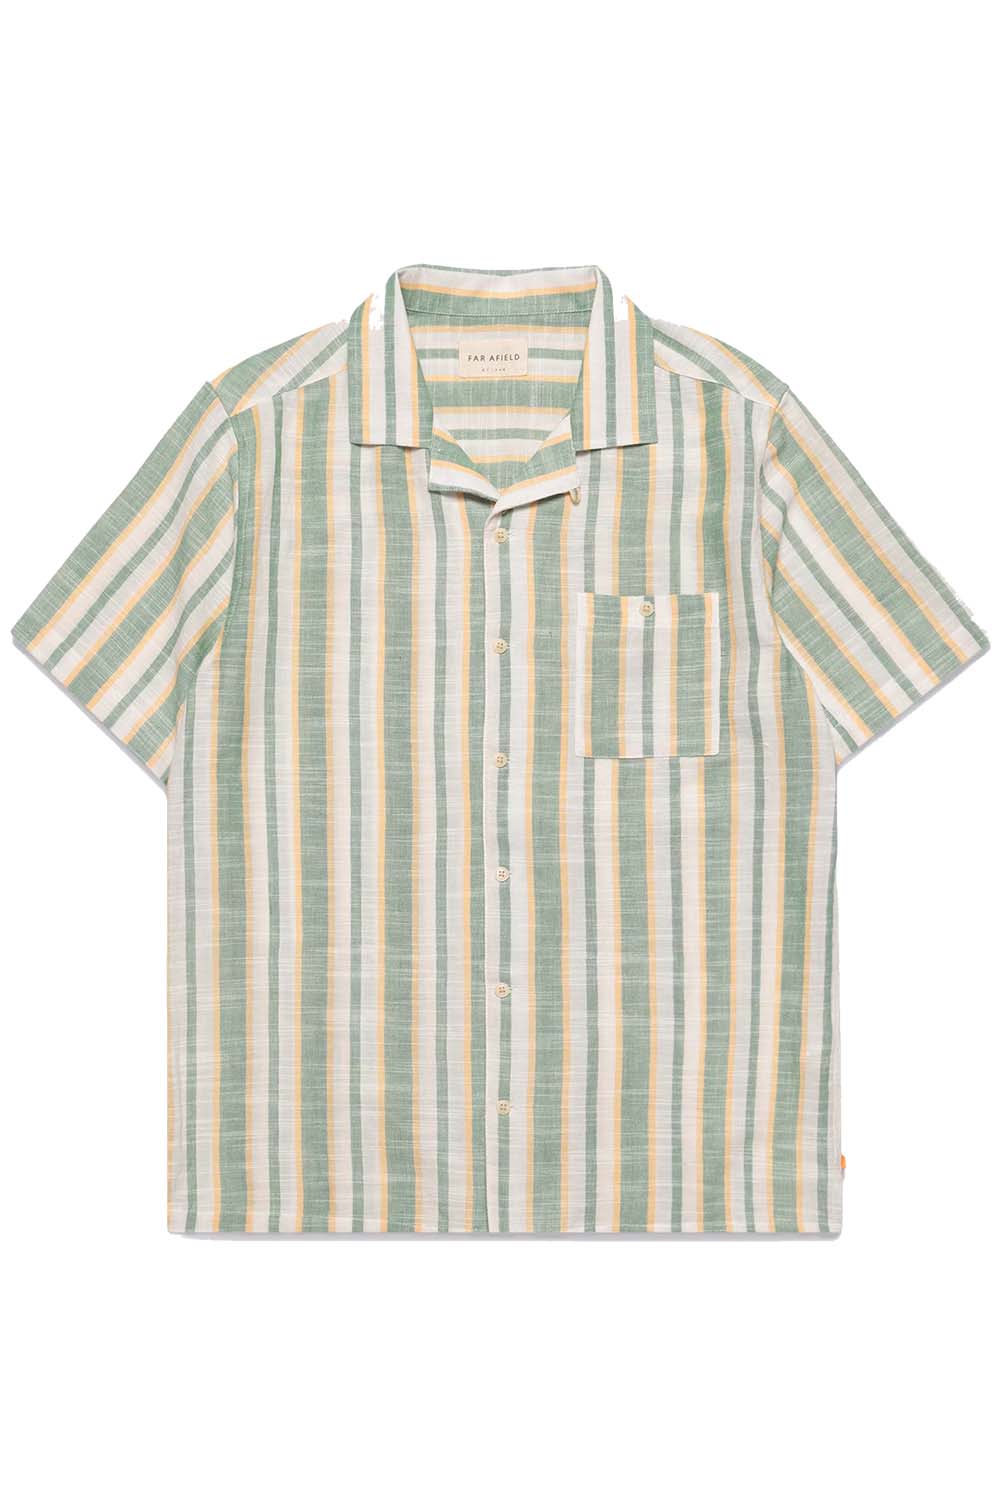 Far Afield - Selleck SS Shirt - Slub Stripe/Frosty Green